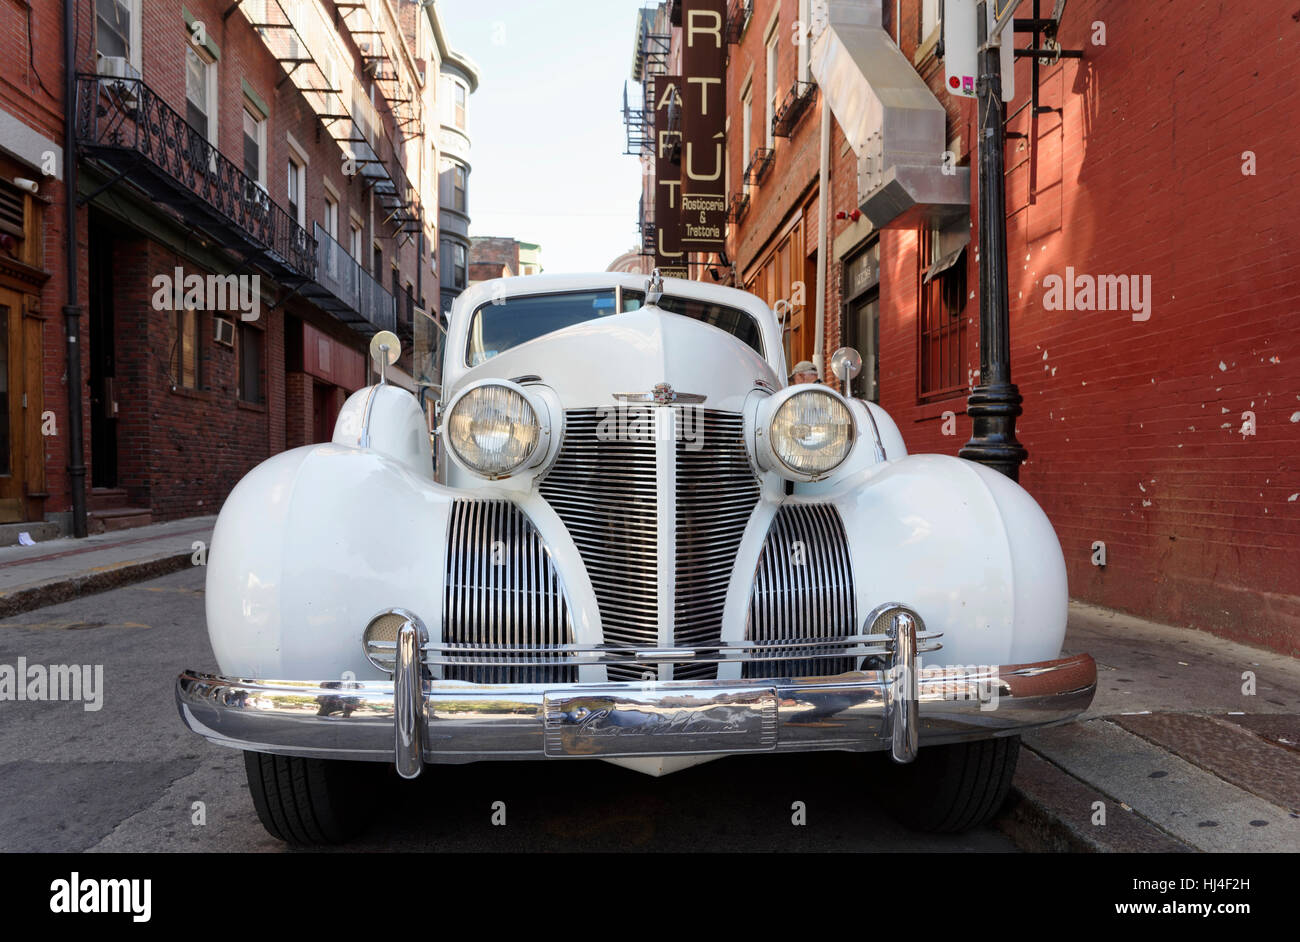 Cadillac vintage car, Freedom Trail, Prince Street, North End, Boston, Massachusetts, USA Stock Photo